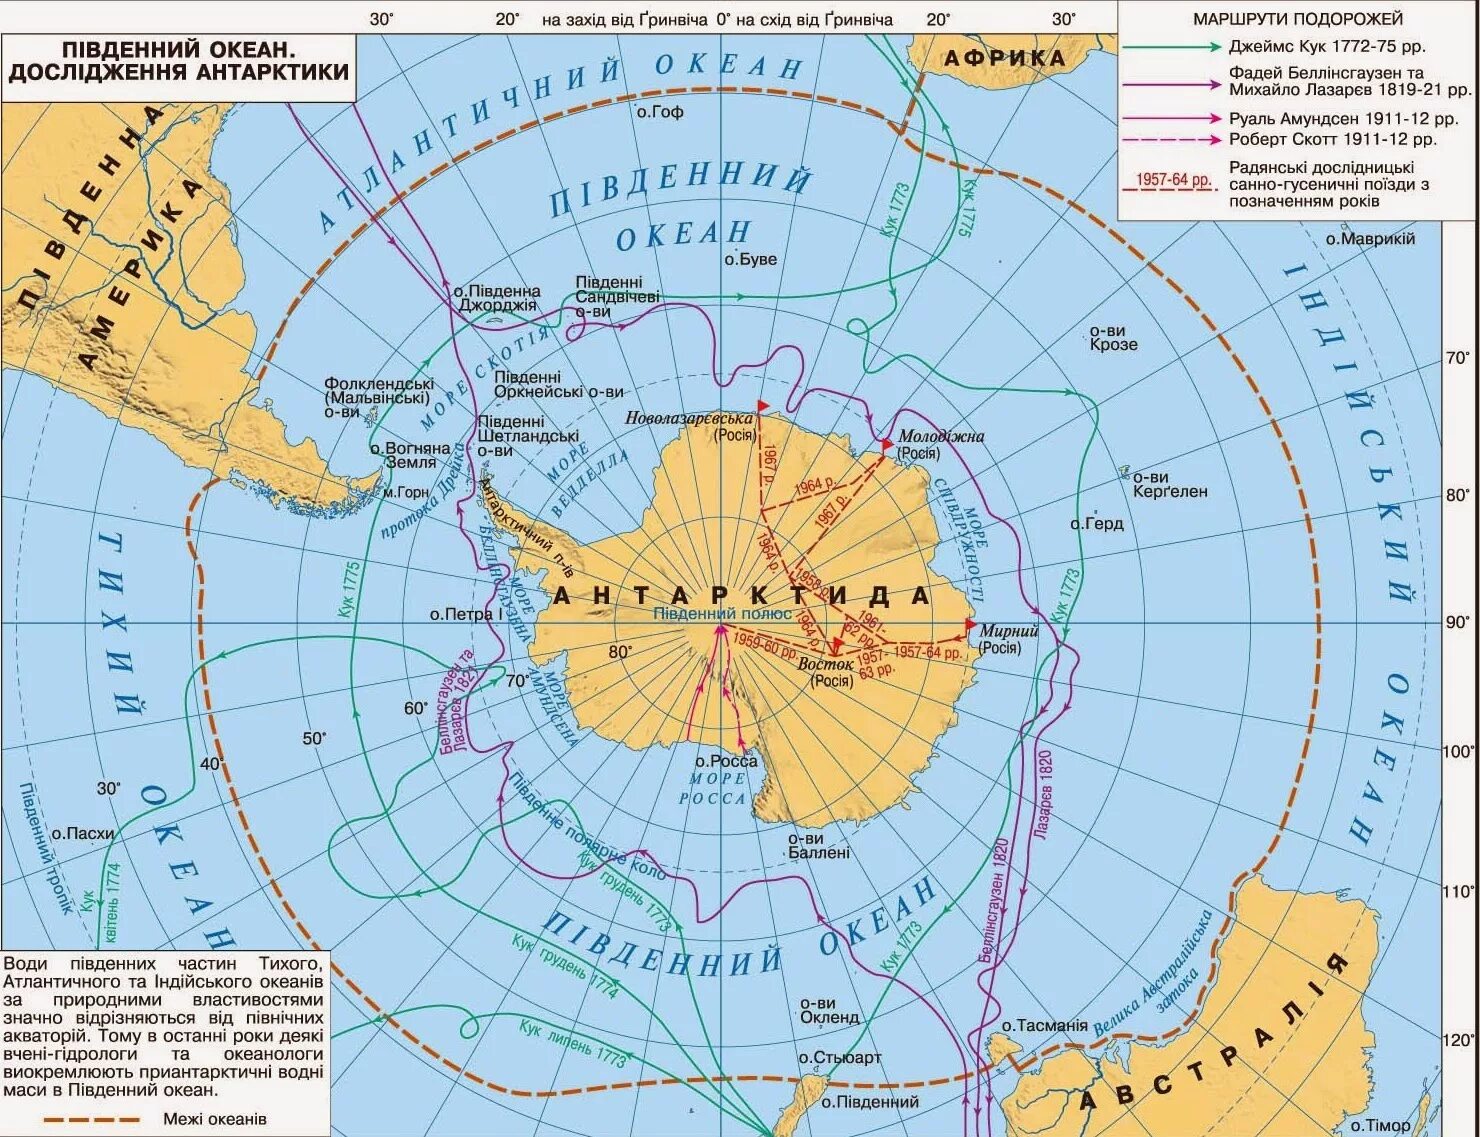 Показать на карте Северный Ледовитый океан и Антарктиду. Море Беллинсгаузена — ; море Амундсена —. Границы Южного океана на карте.